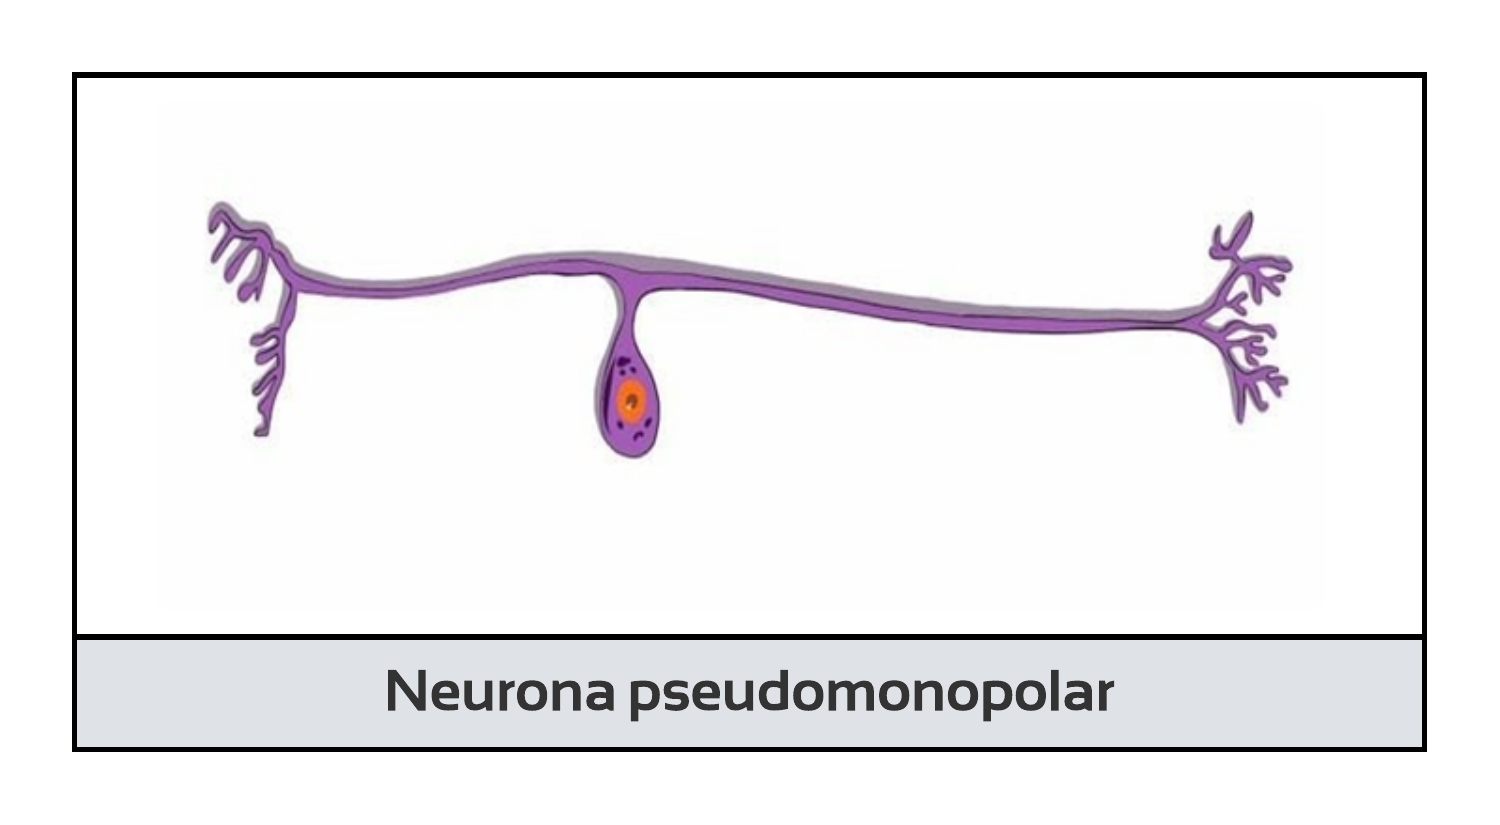 Neurona pseudomonopolar